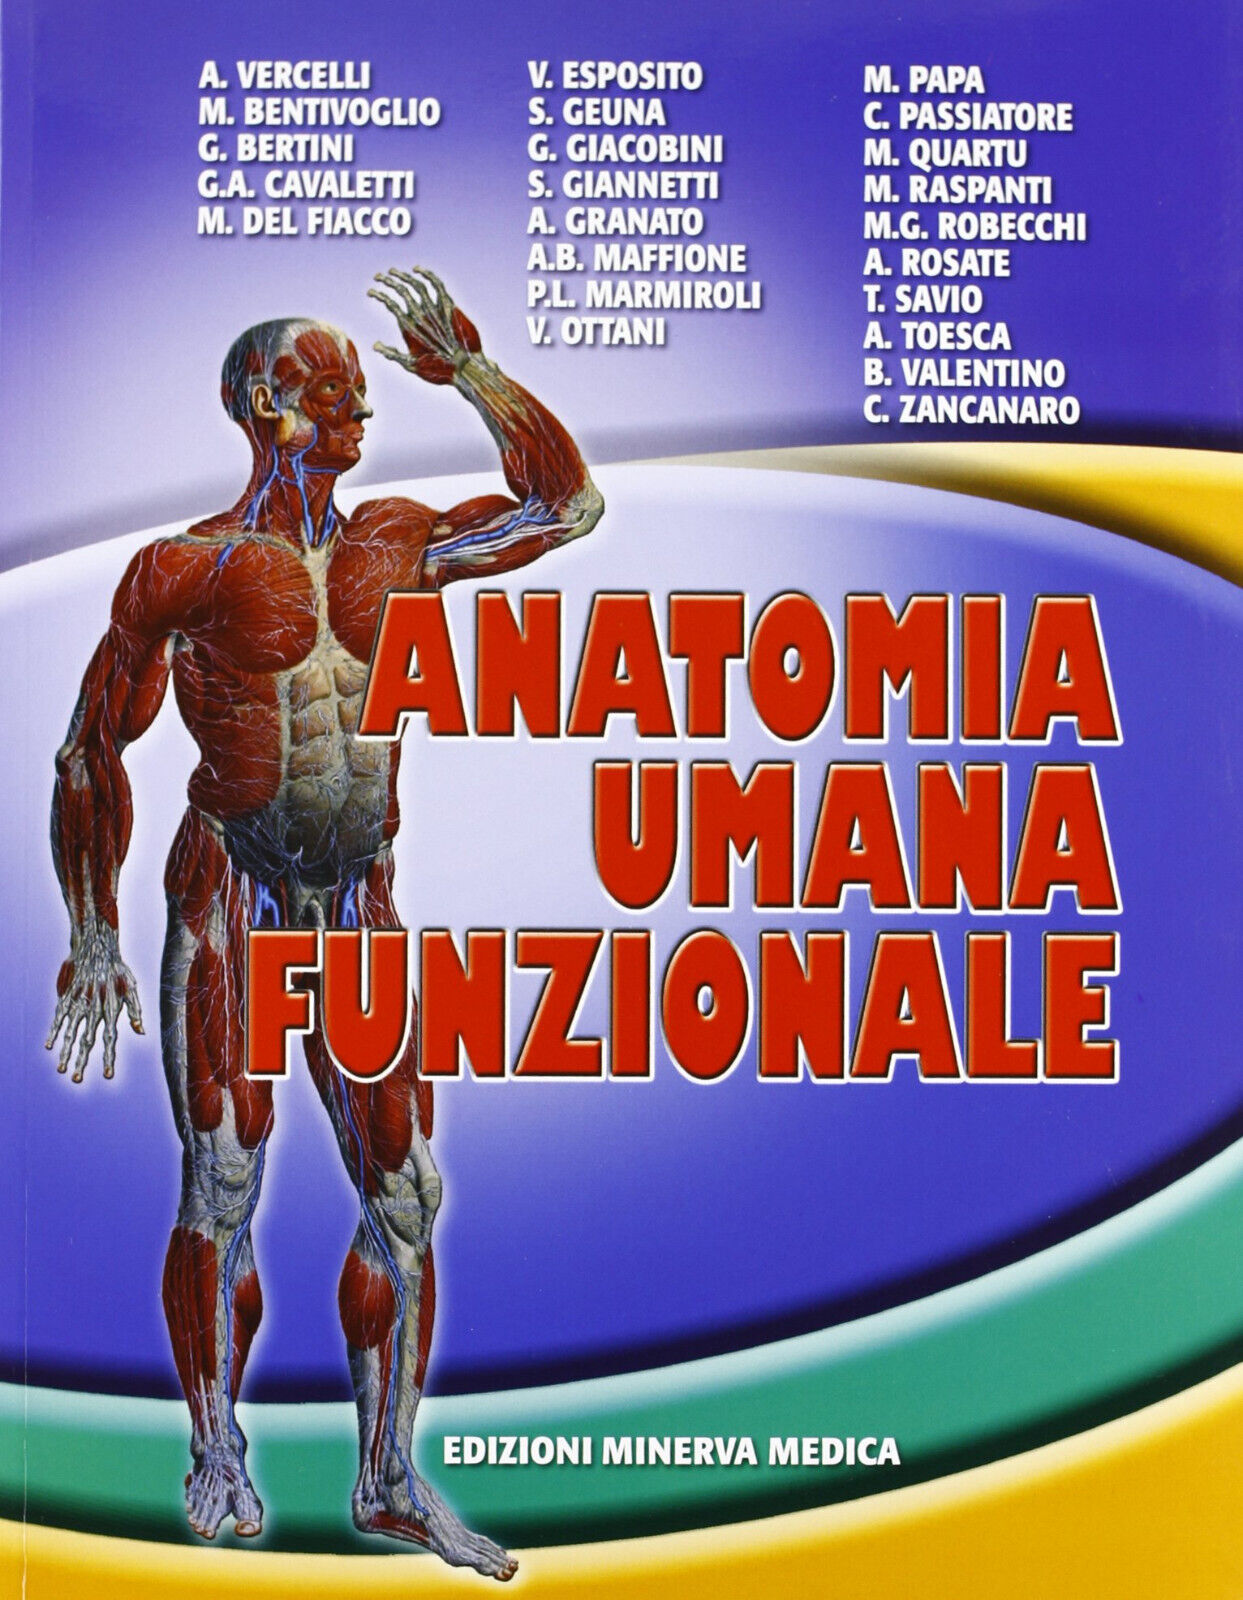 Anatomia umana funzionale - Alessandro Vercelli - Minerva, 2011